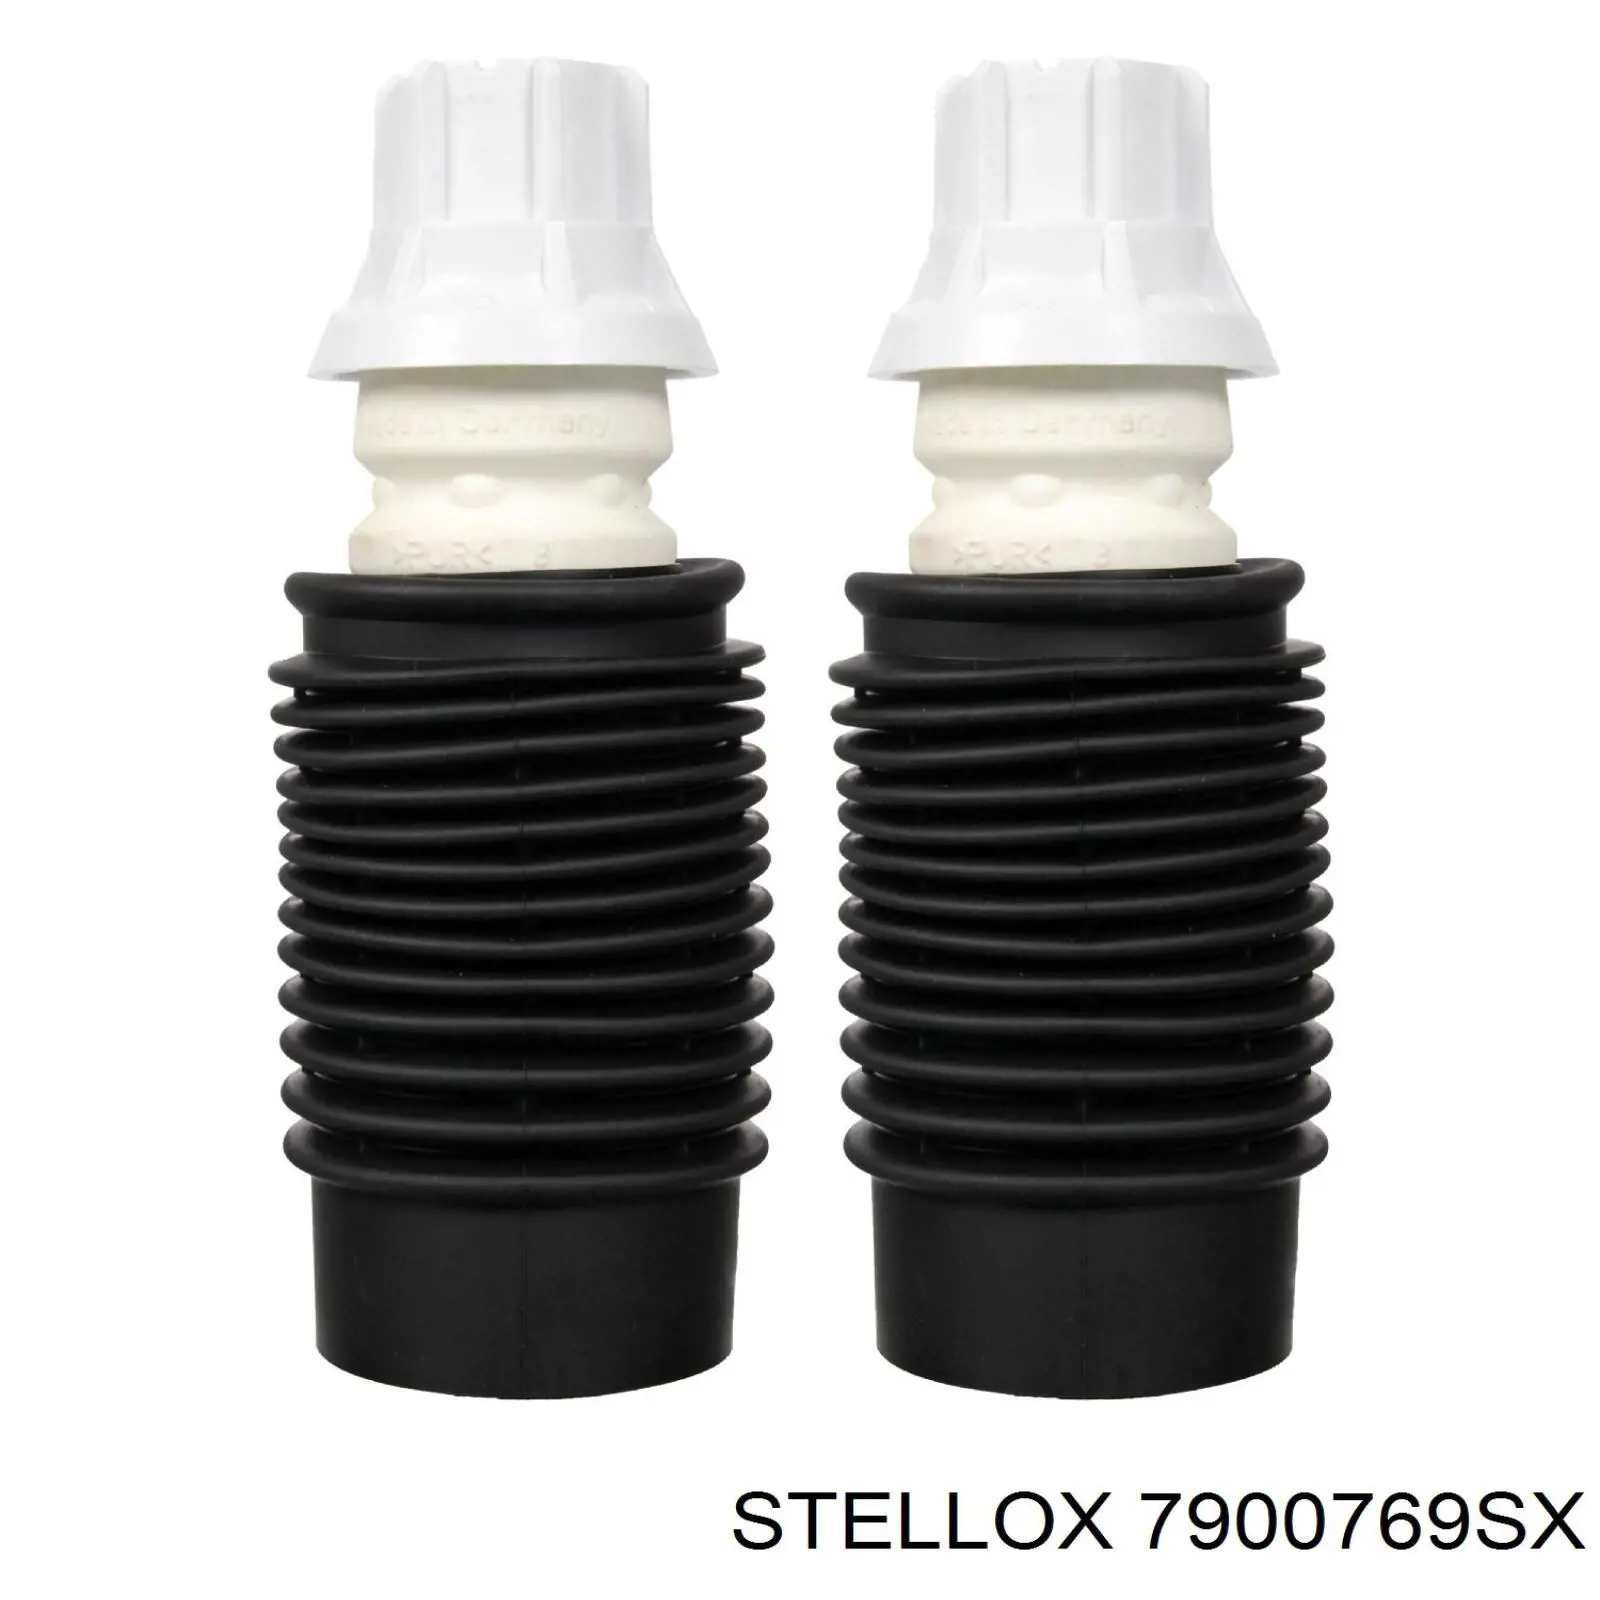 7900769SX Stellox casquillo del soporte de barra estabilizadora delantera